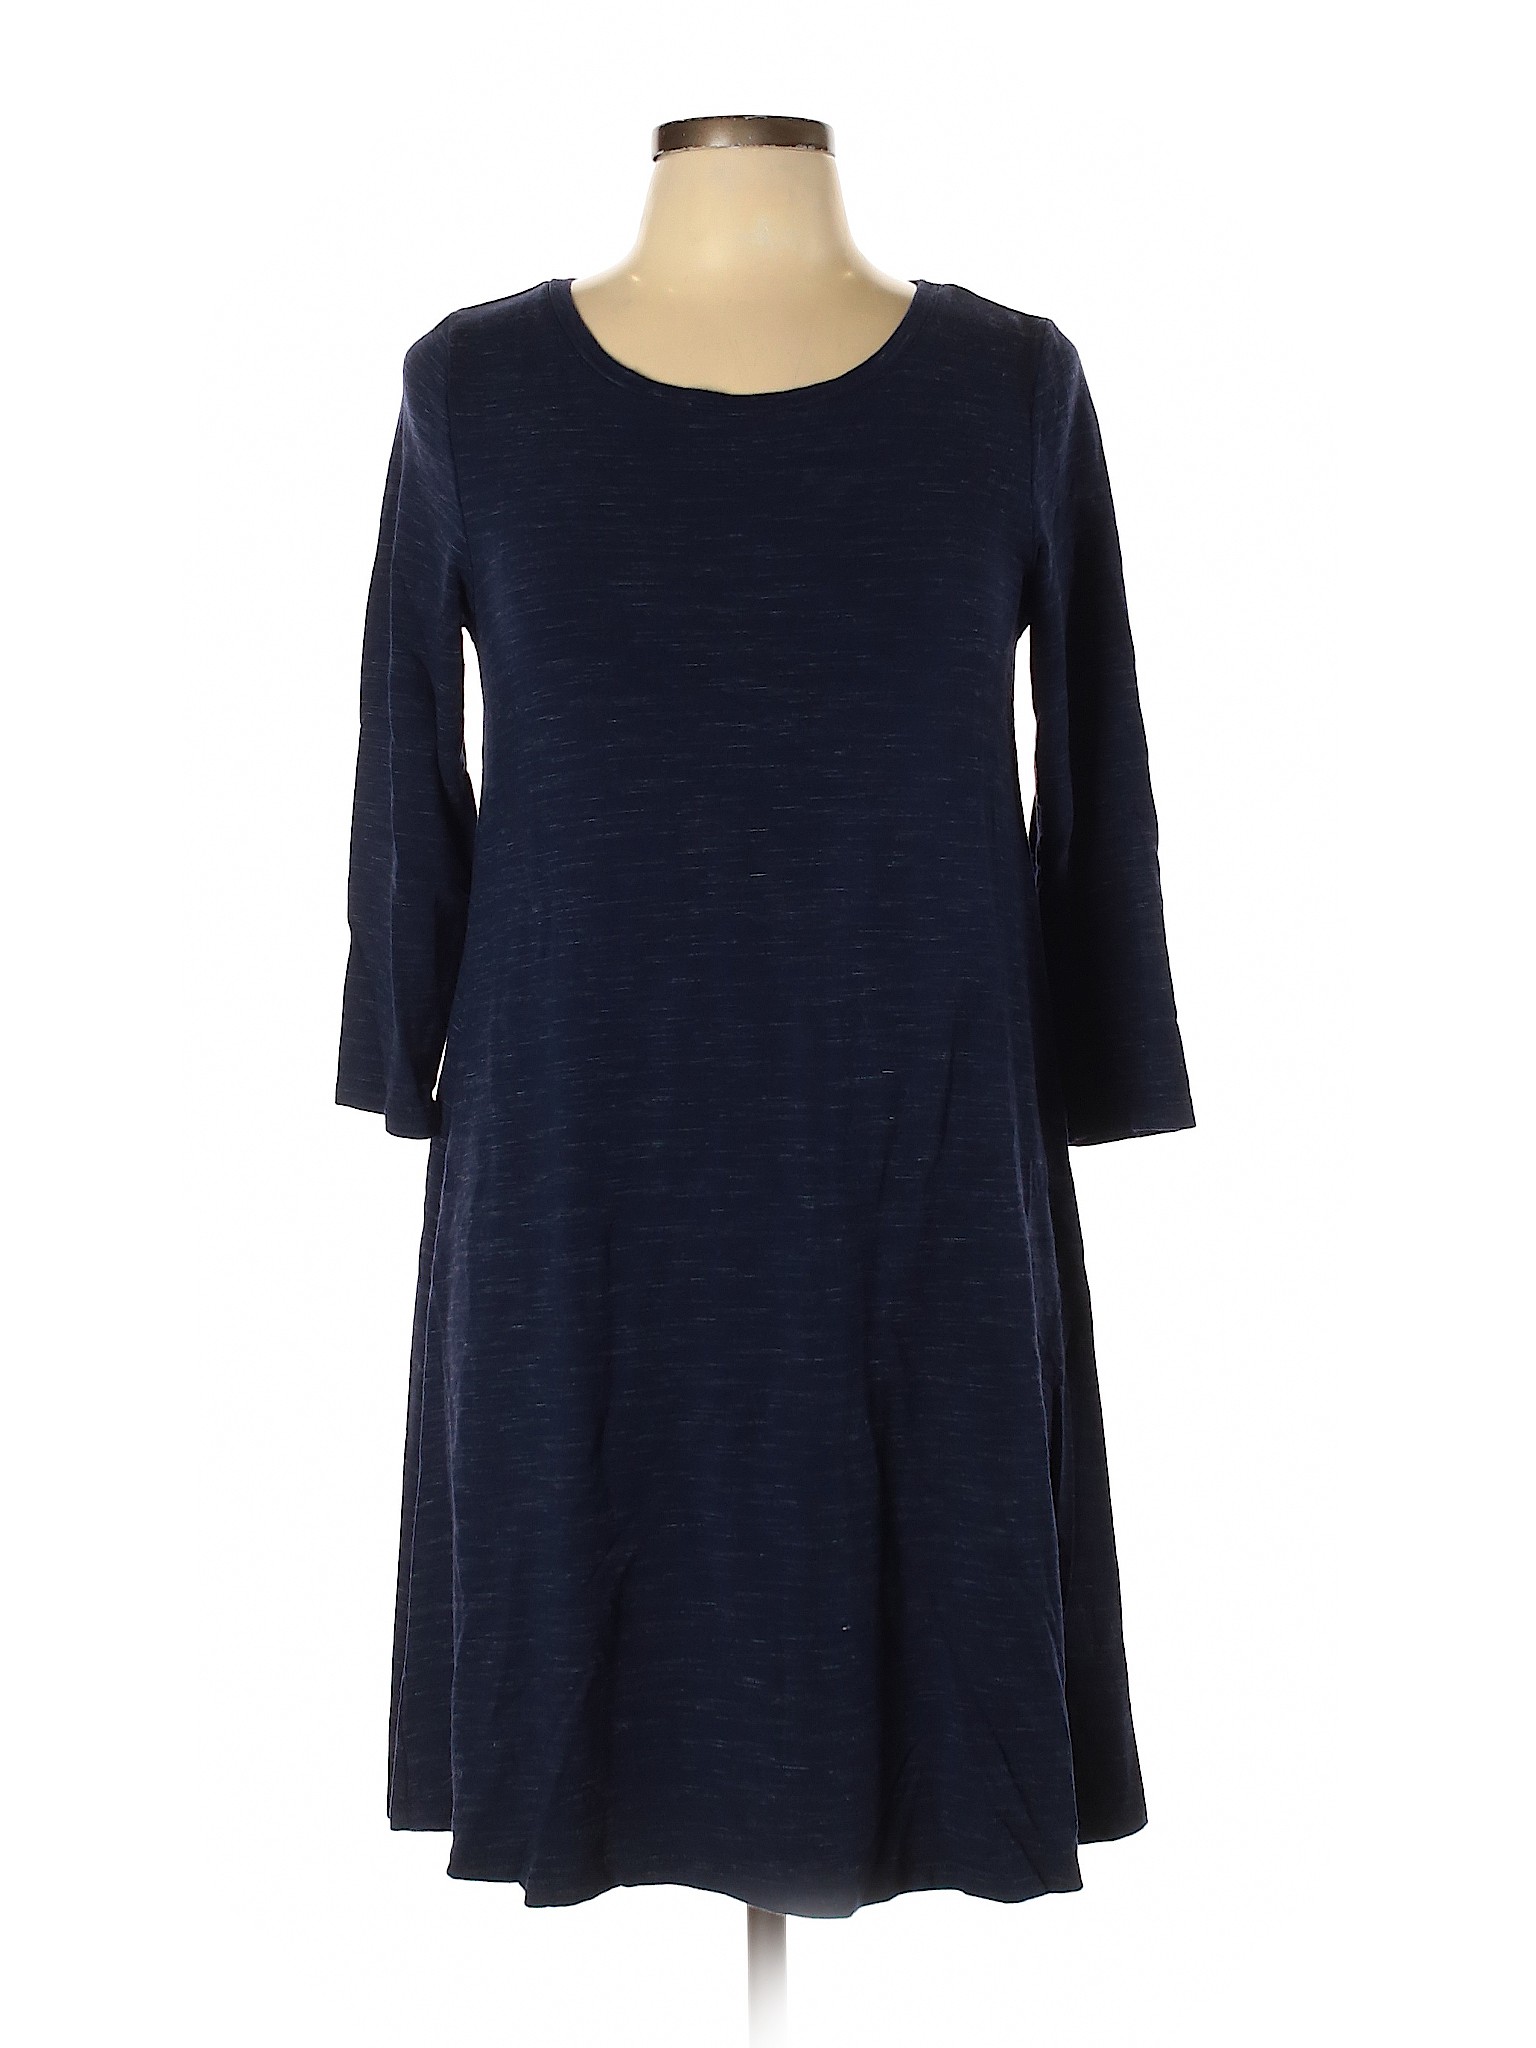 Hilary Radley Women Blue Casual Dress M | eBay